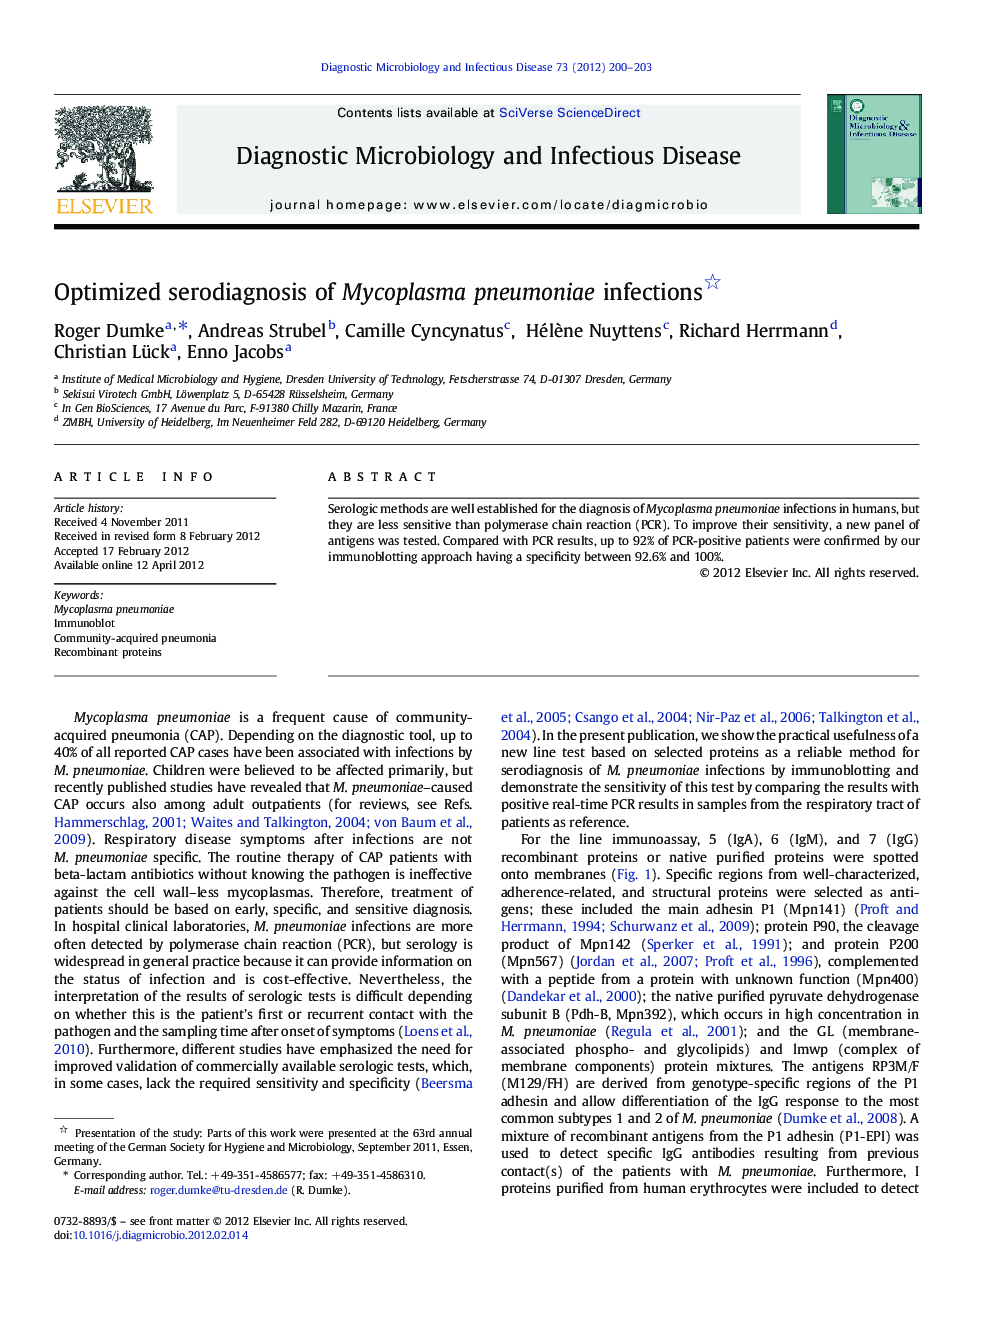 Optimized serodiagnosis of Mycoplasma pneumoniae infections 